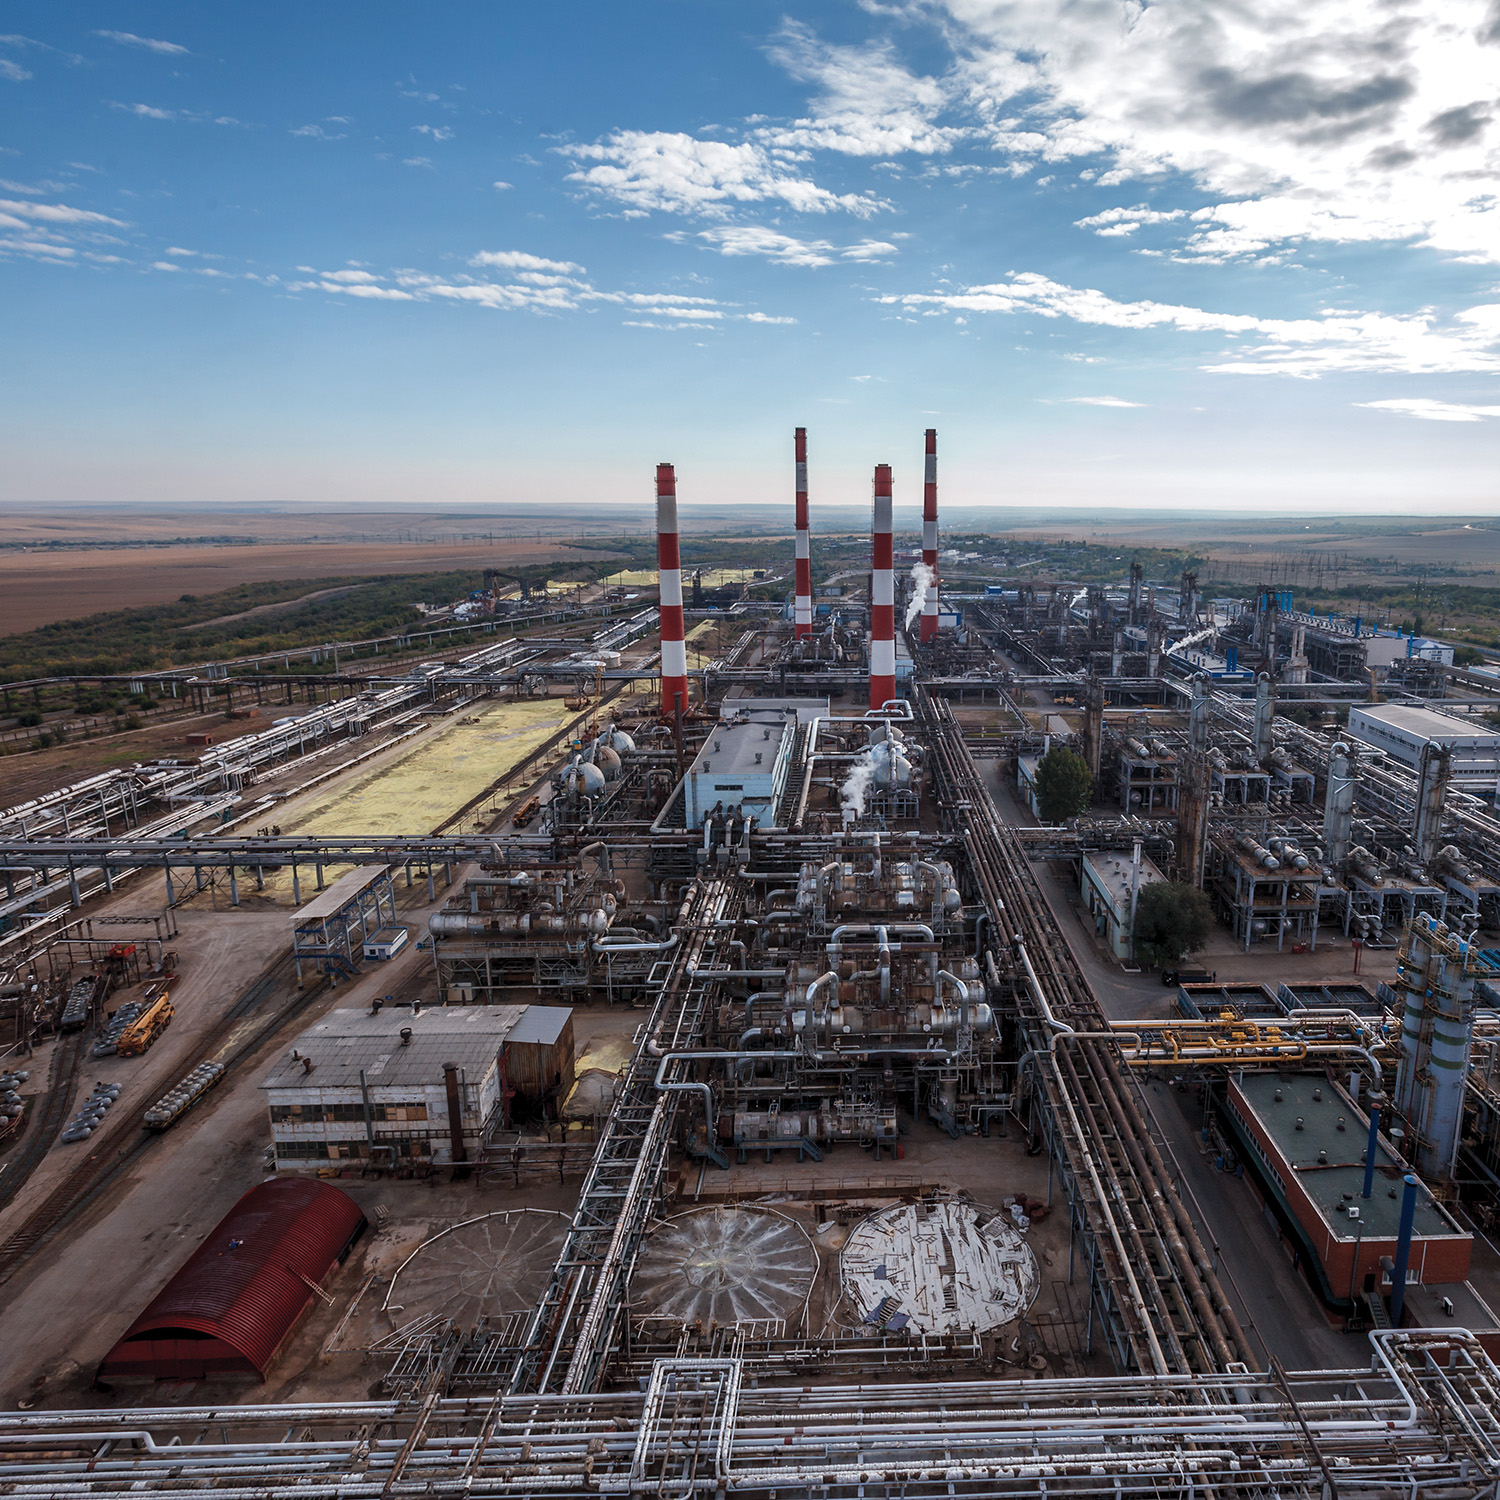 Orenburg gas chemical complex